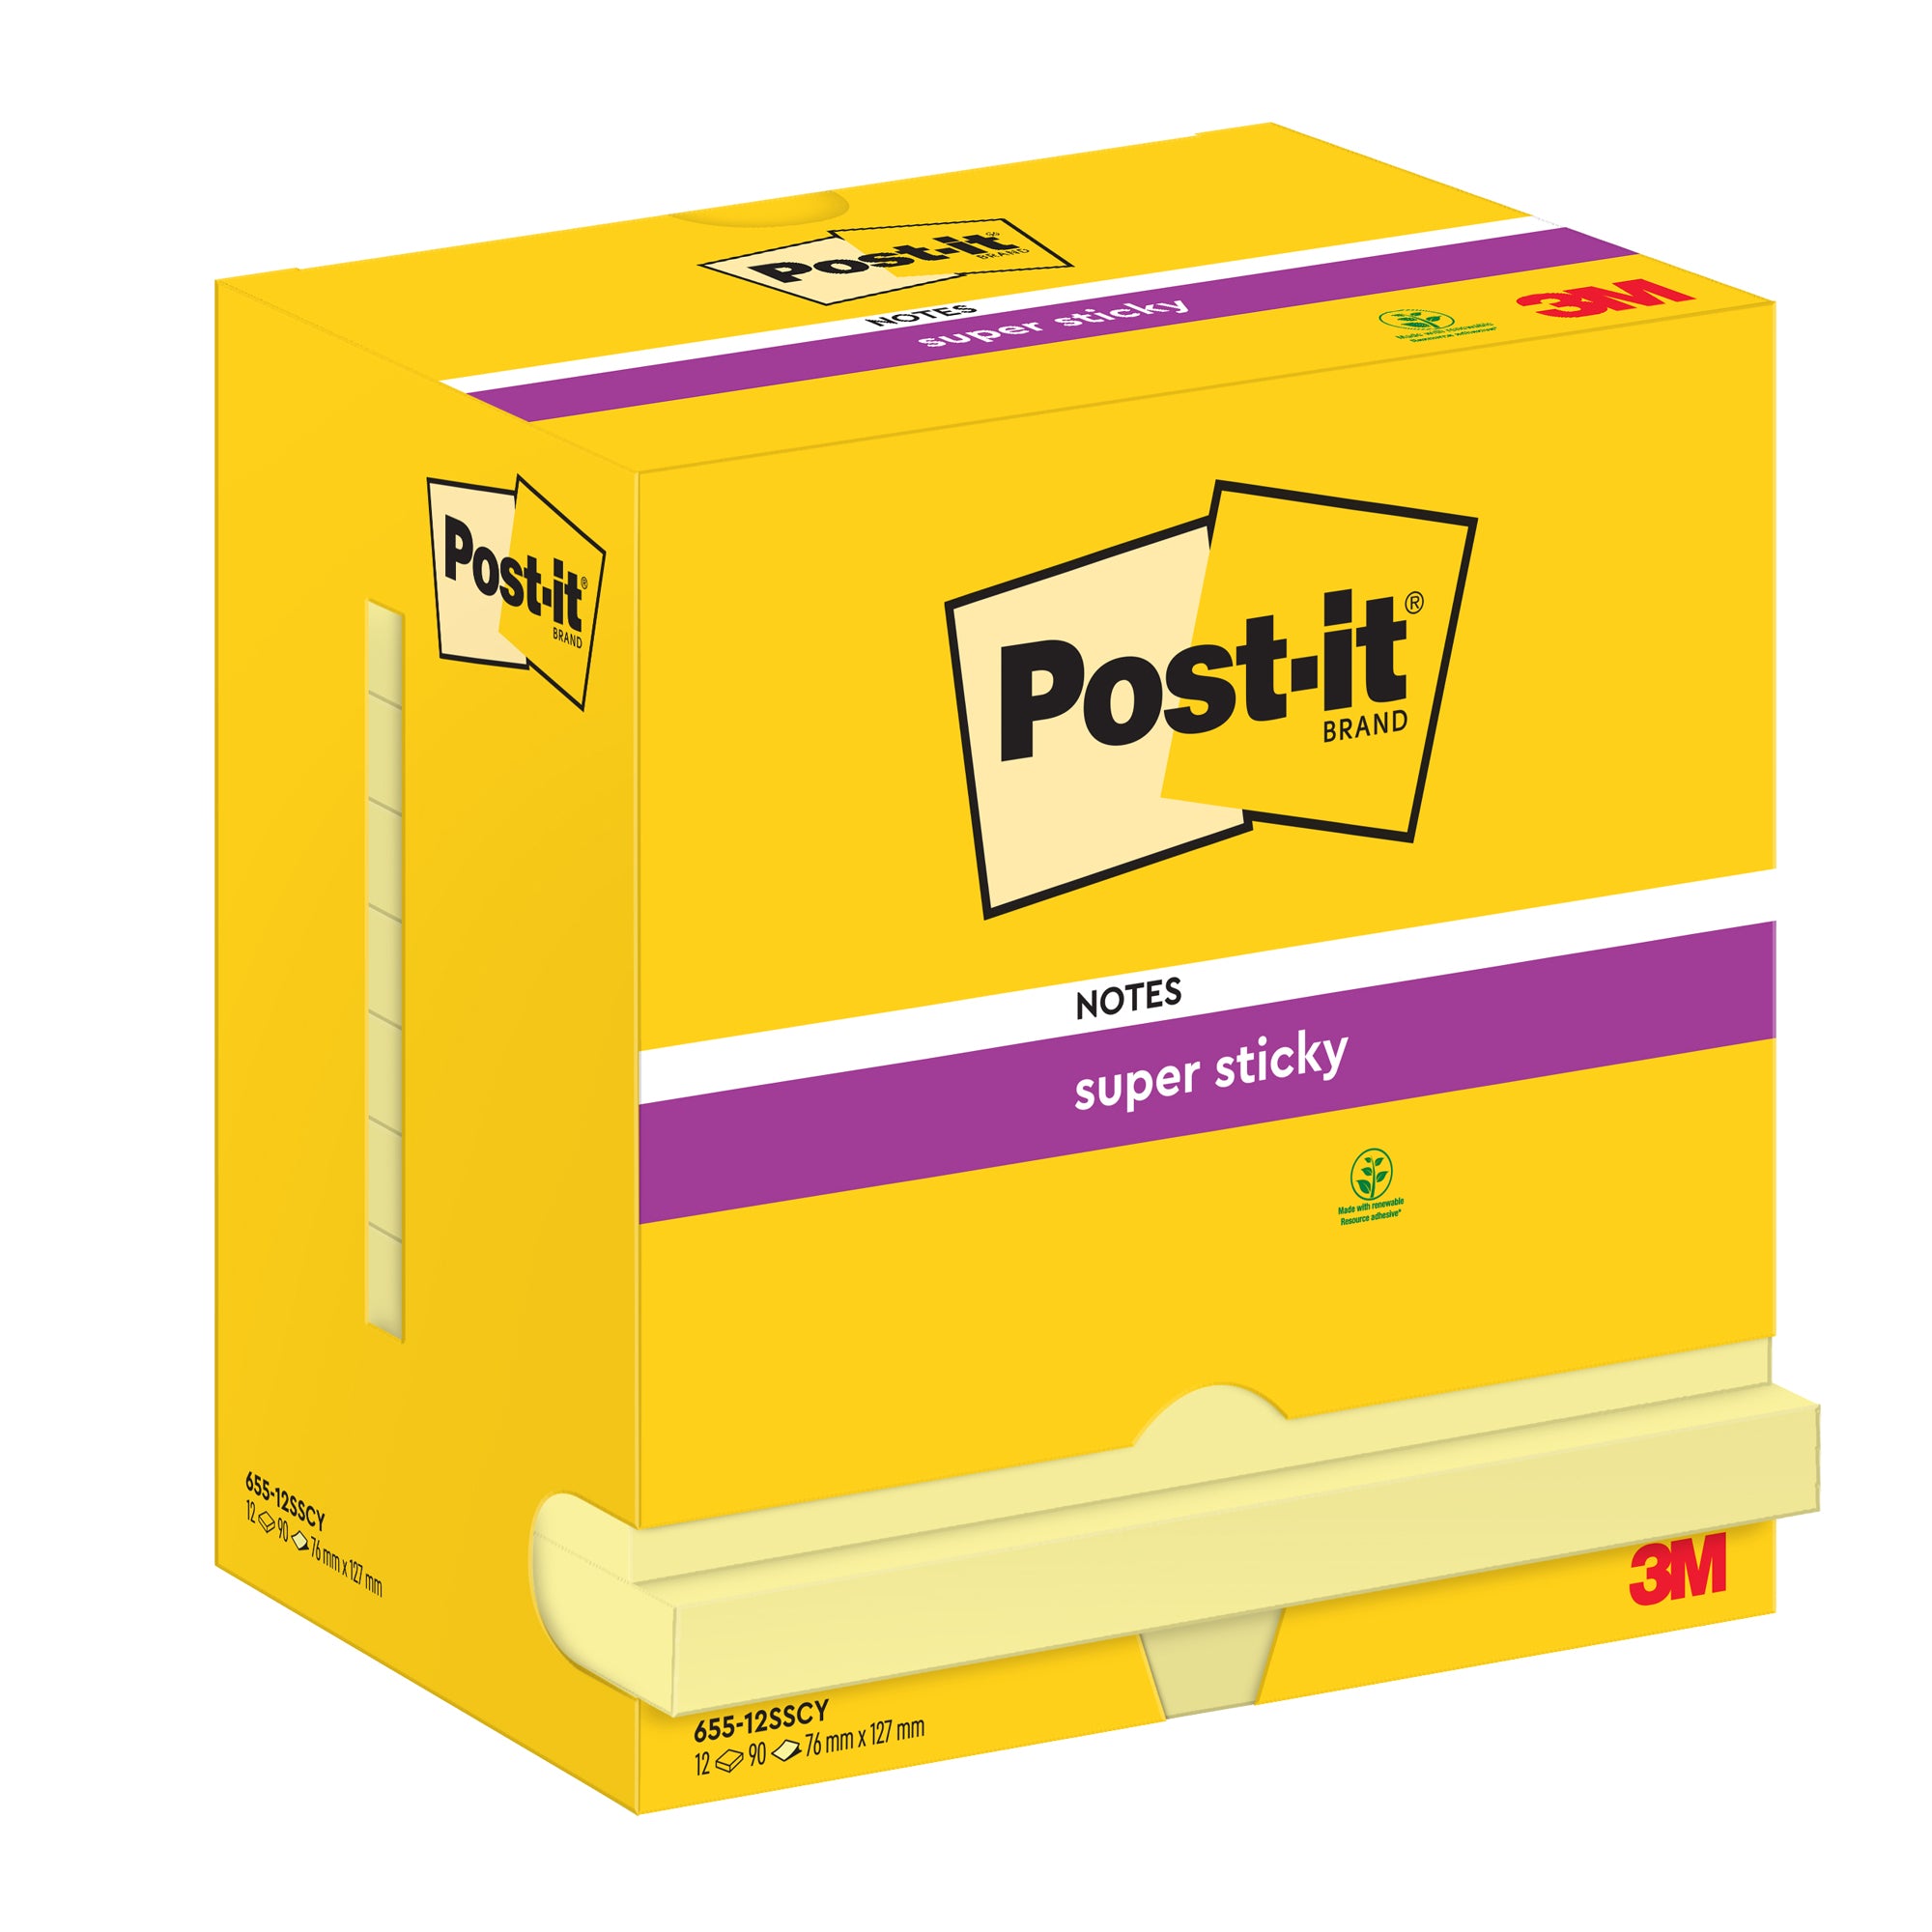 post-it-blocco-90foglietti-supersticky-giallo-canary-76x127mm-655-12ss-cy